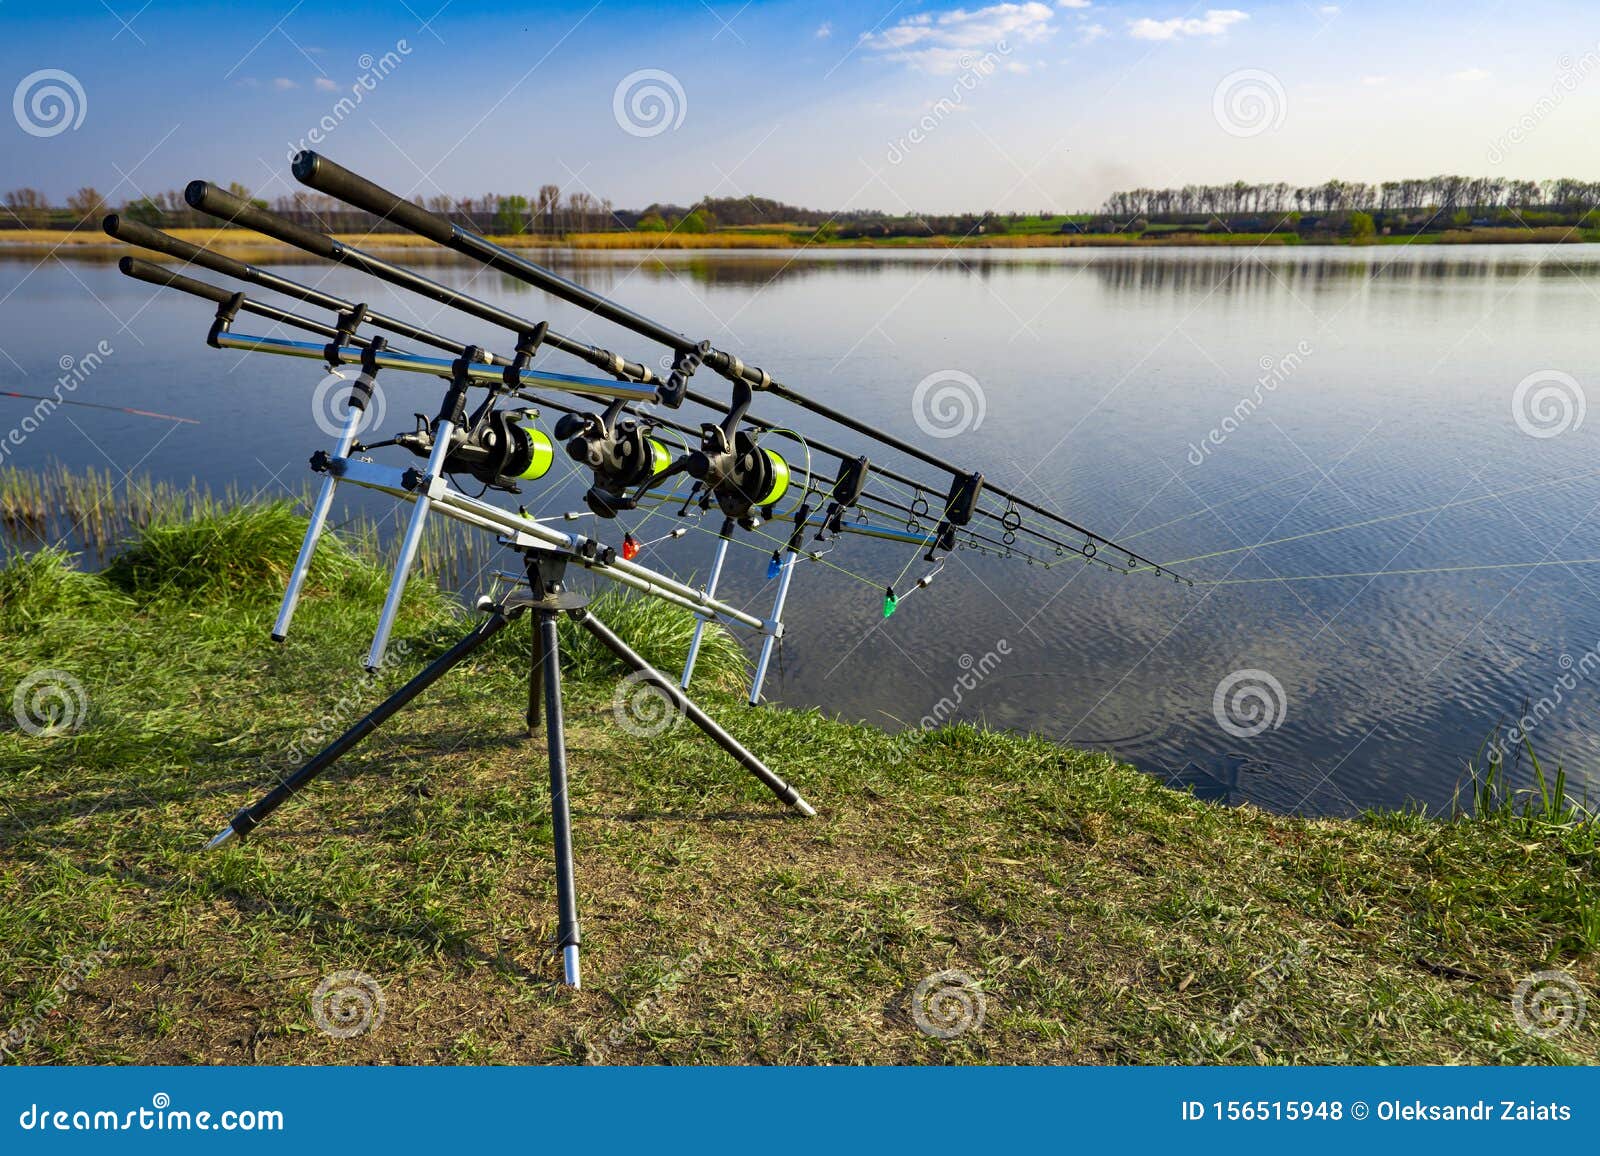 https://thumbs.dreamstime.com/z/carp-fishing-rods-standing-rod-pod-near-lake-sunrise-morning-under-blue-sky-clouds-156515948.jpg